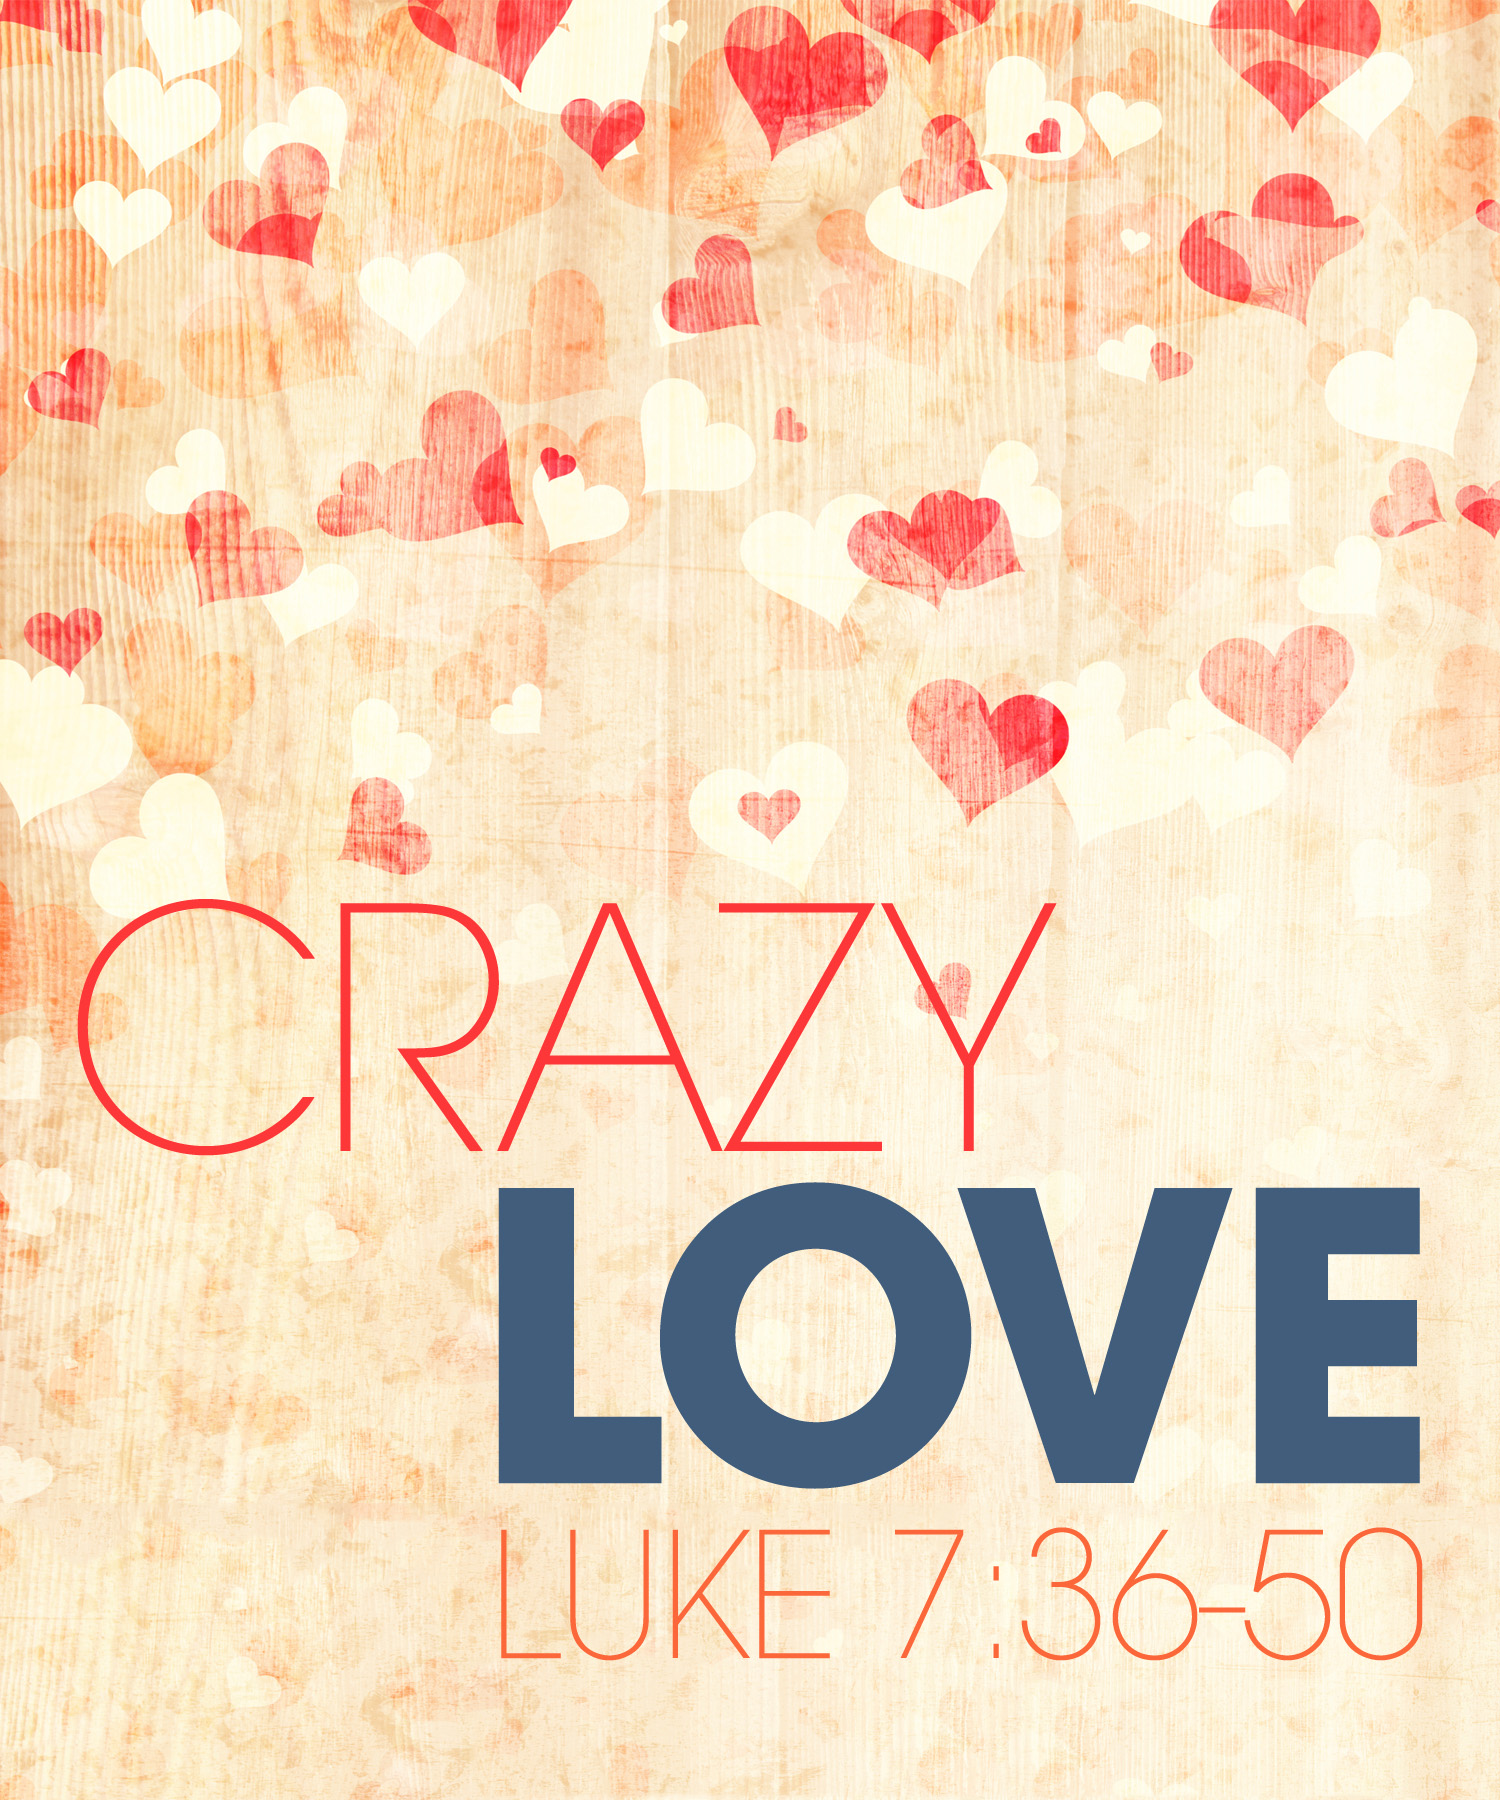 Crazy Love! | John Black | 03-06-16